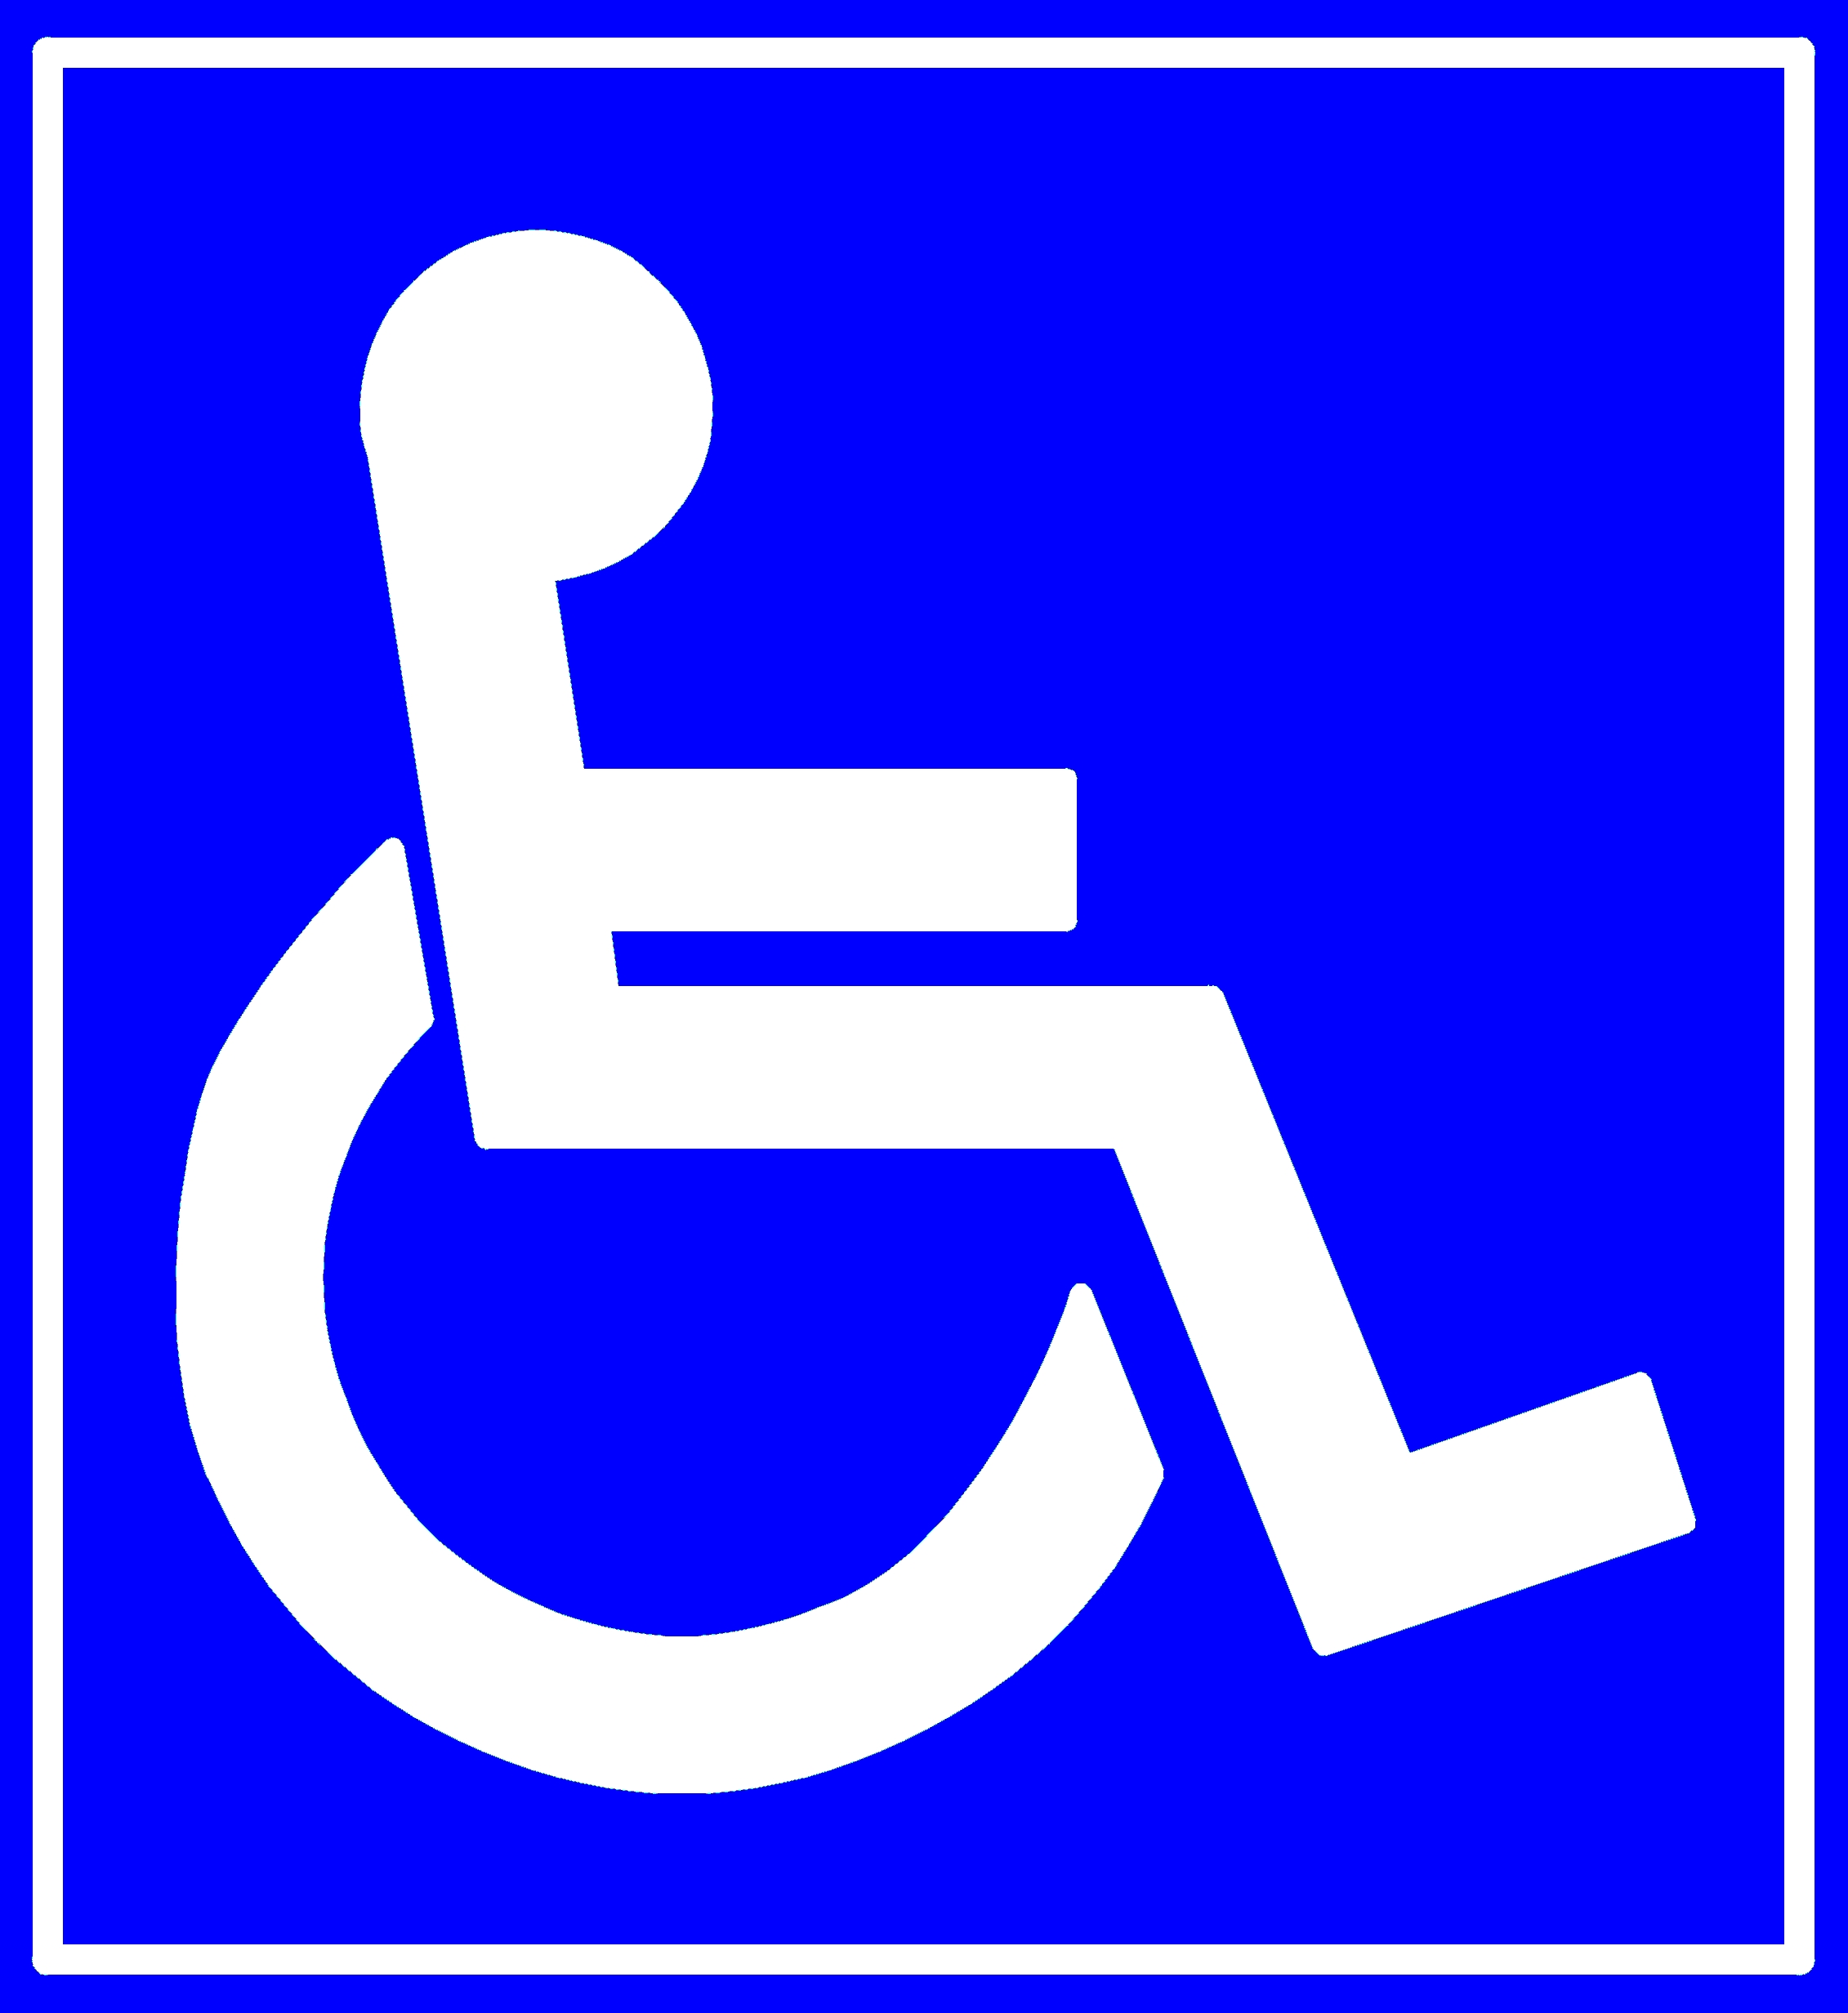 signs handicapped wheelchair logos handicap logo sign #93Lq